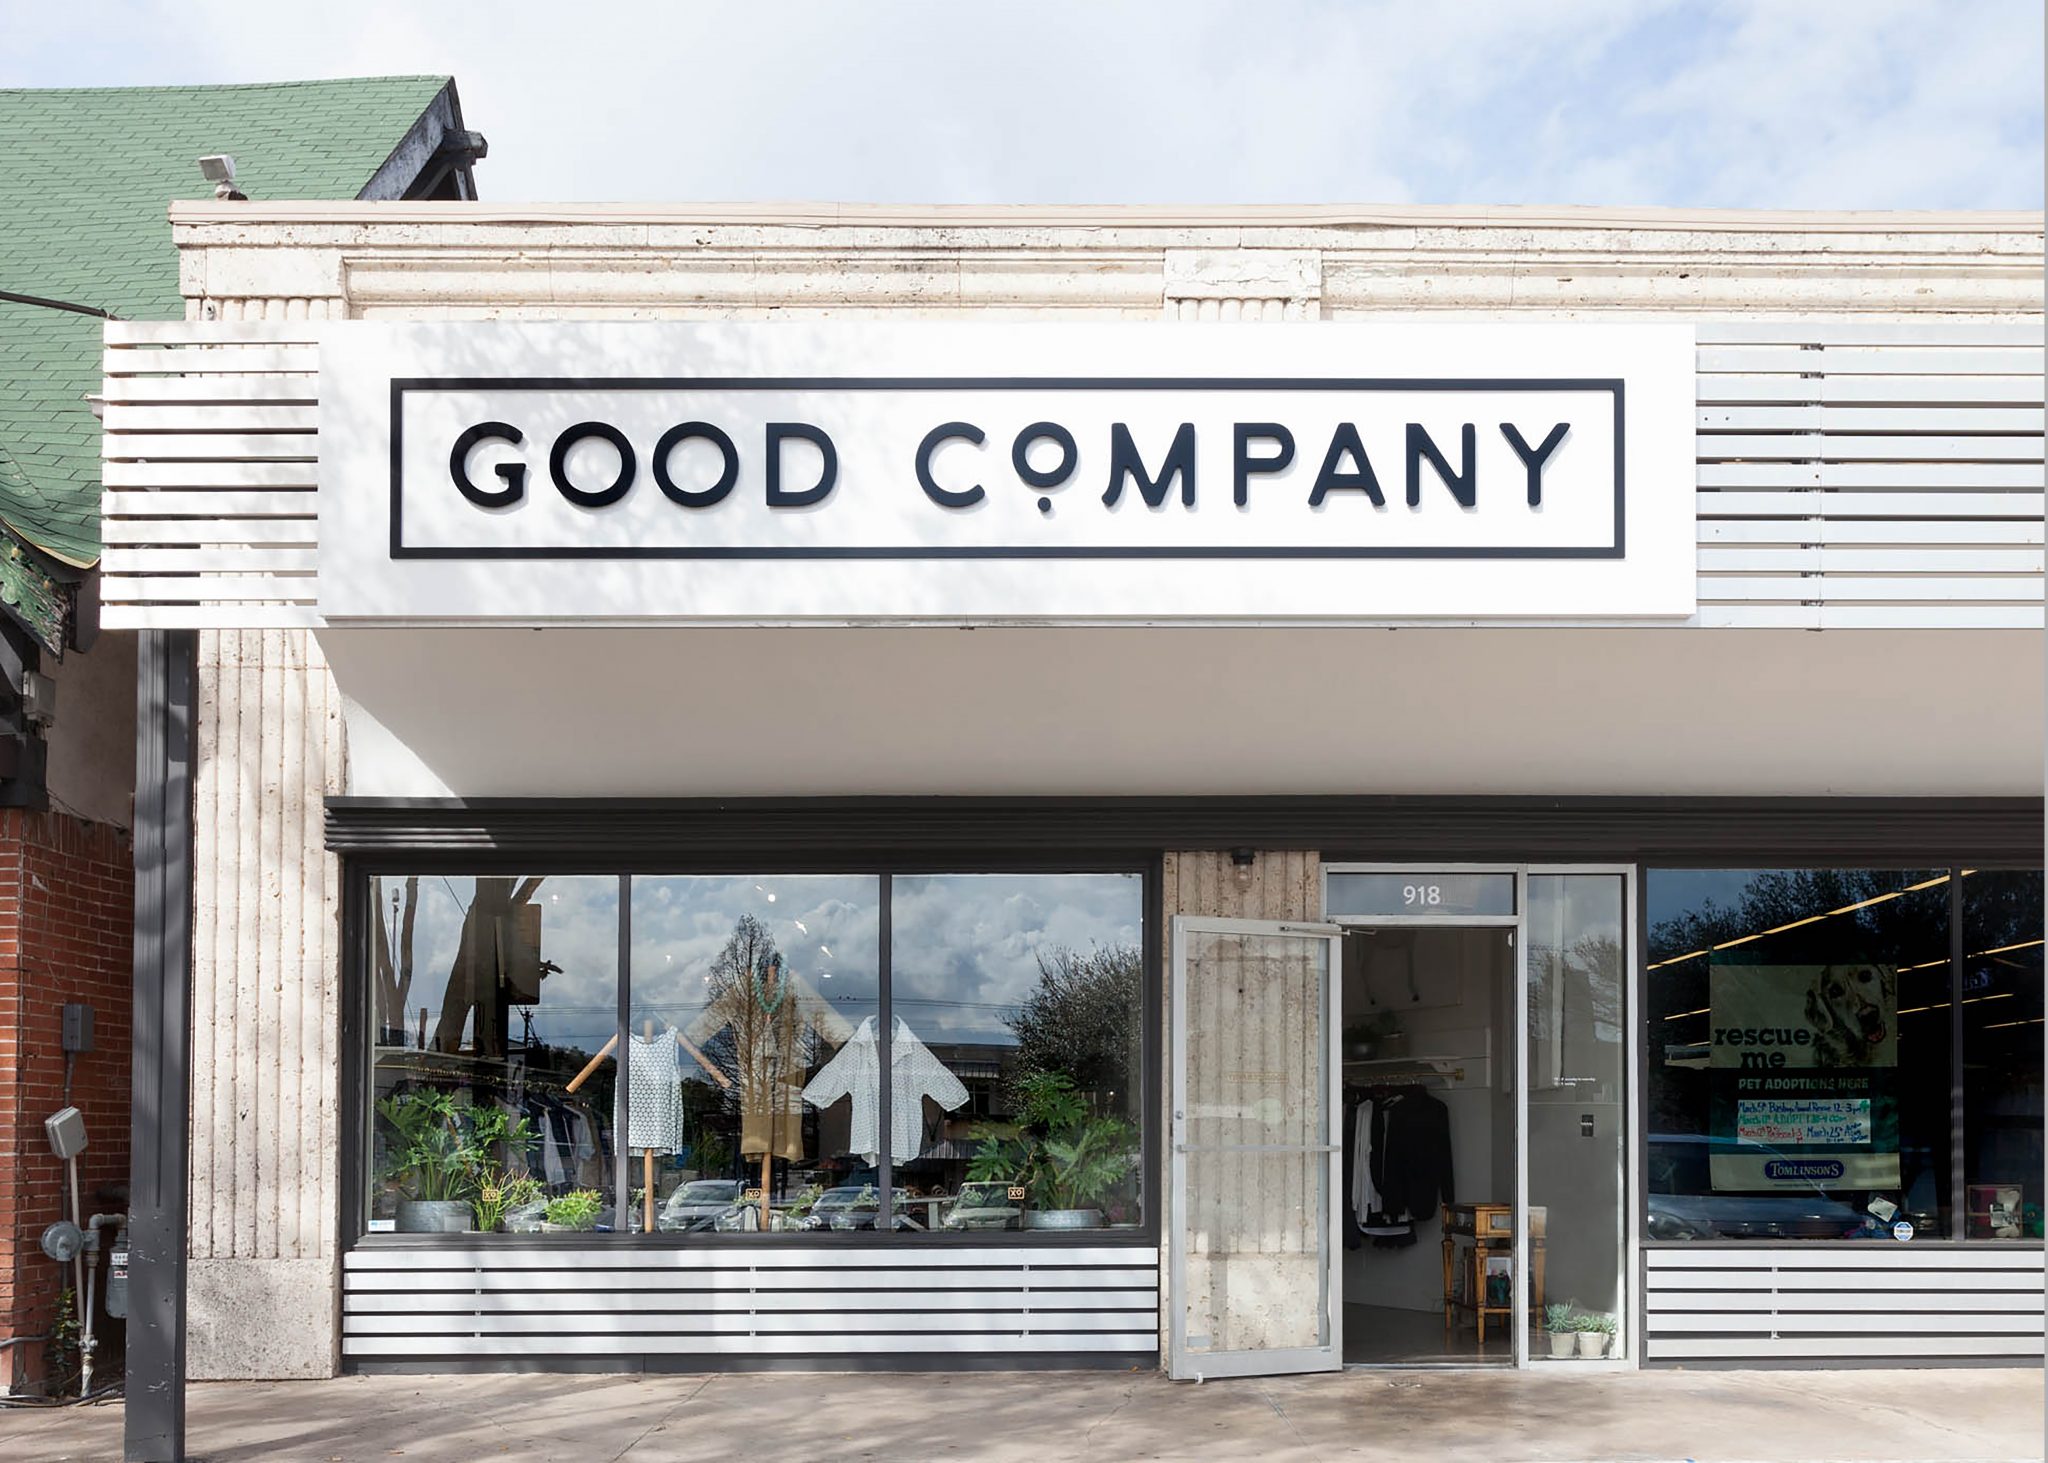 Good Company storefront